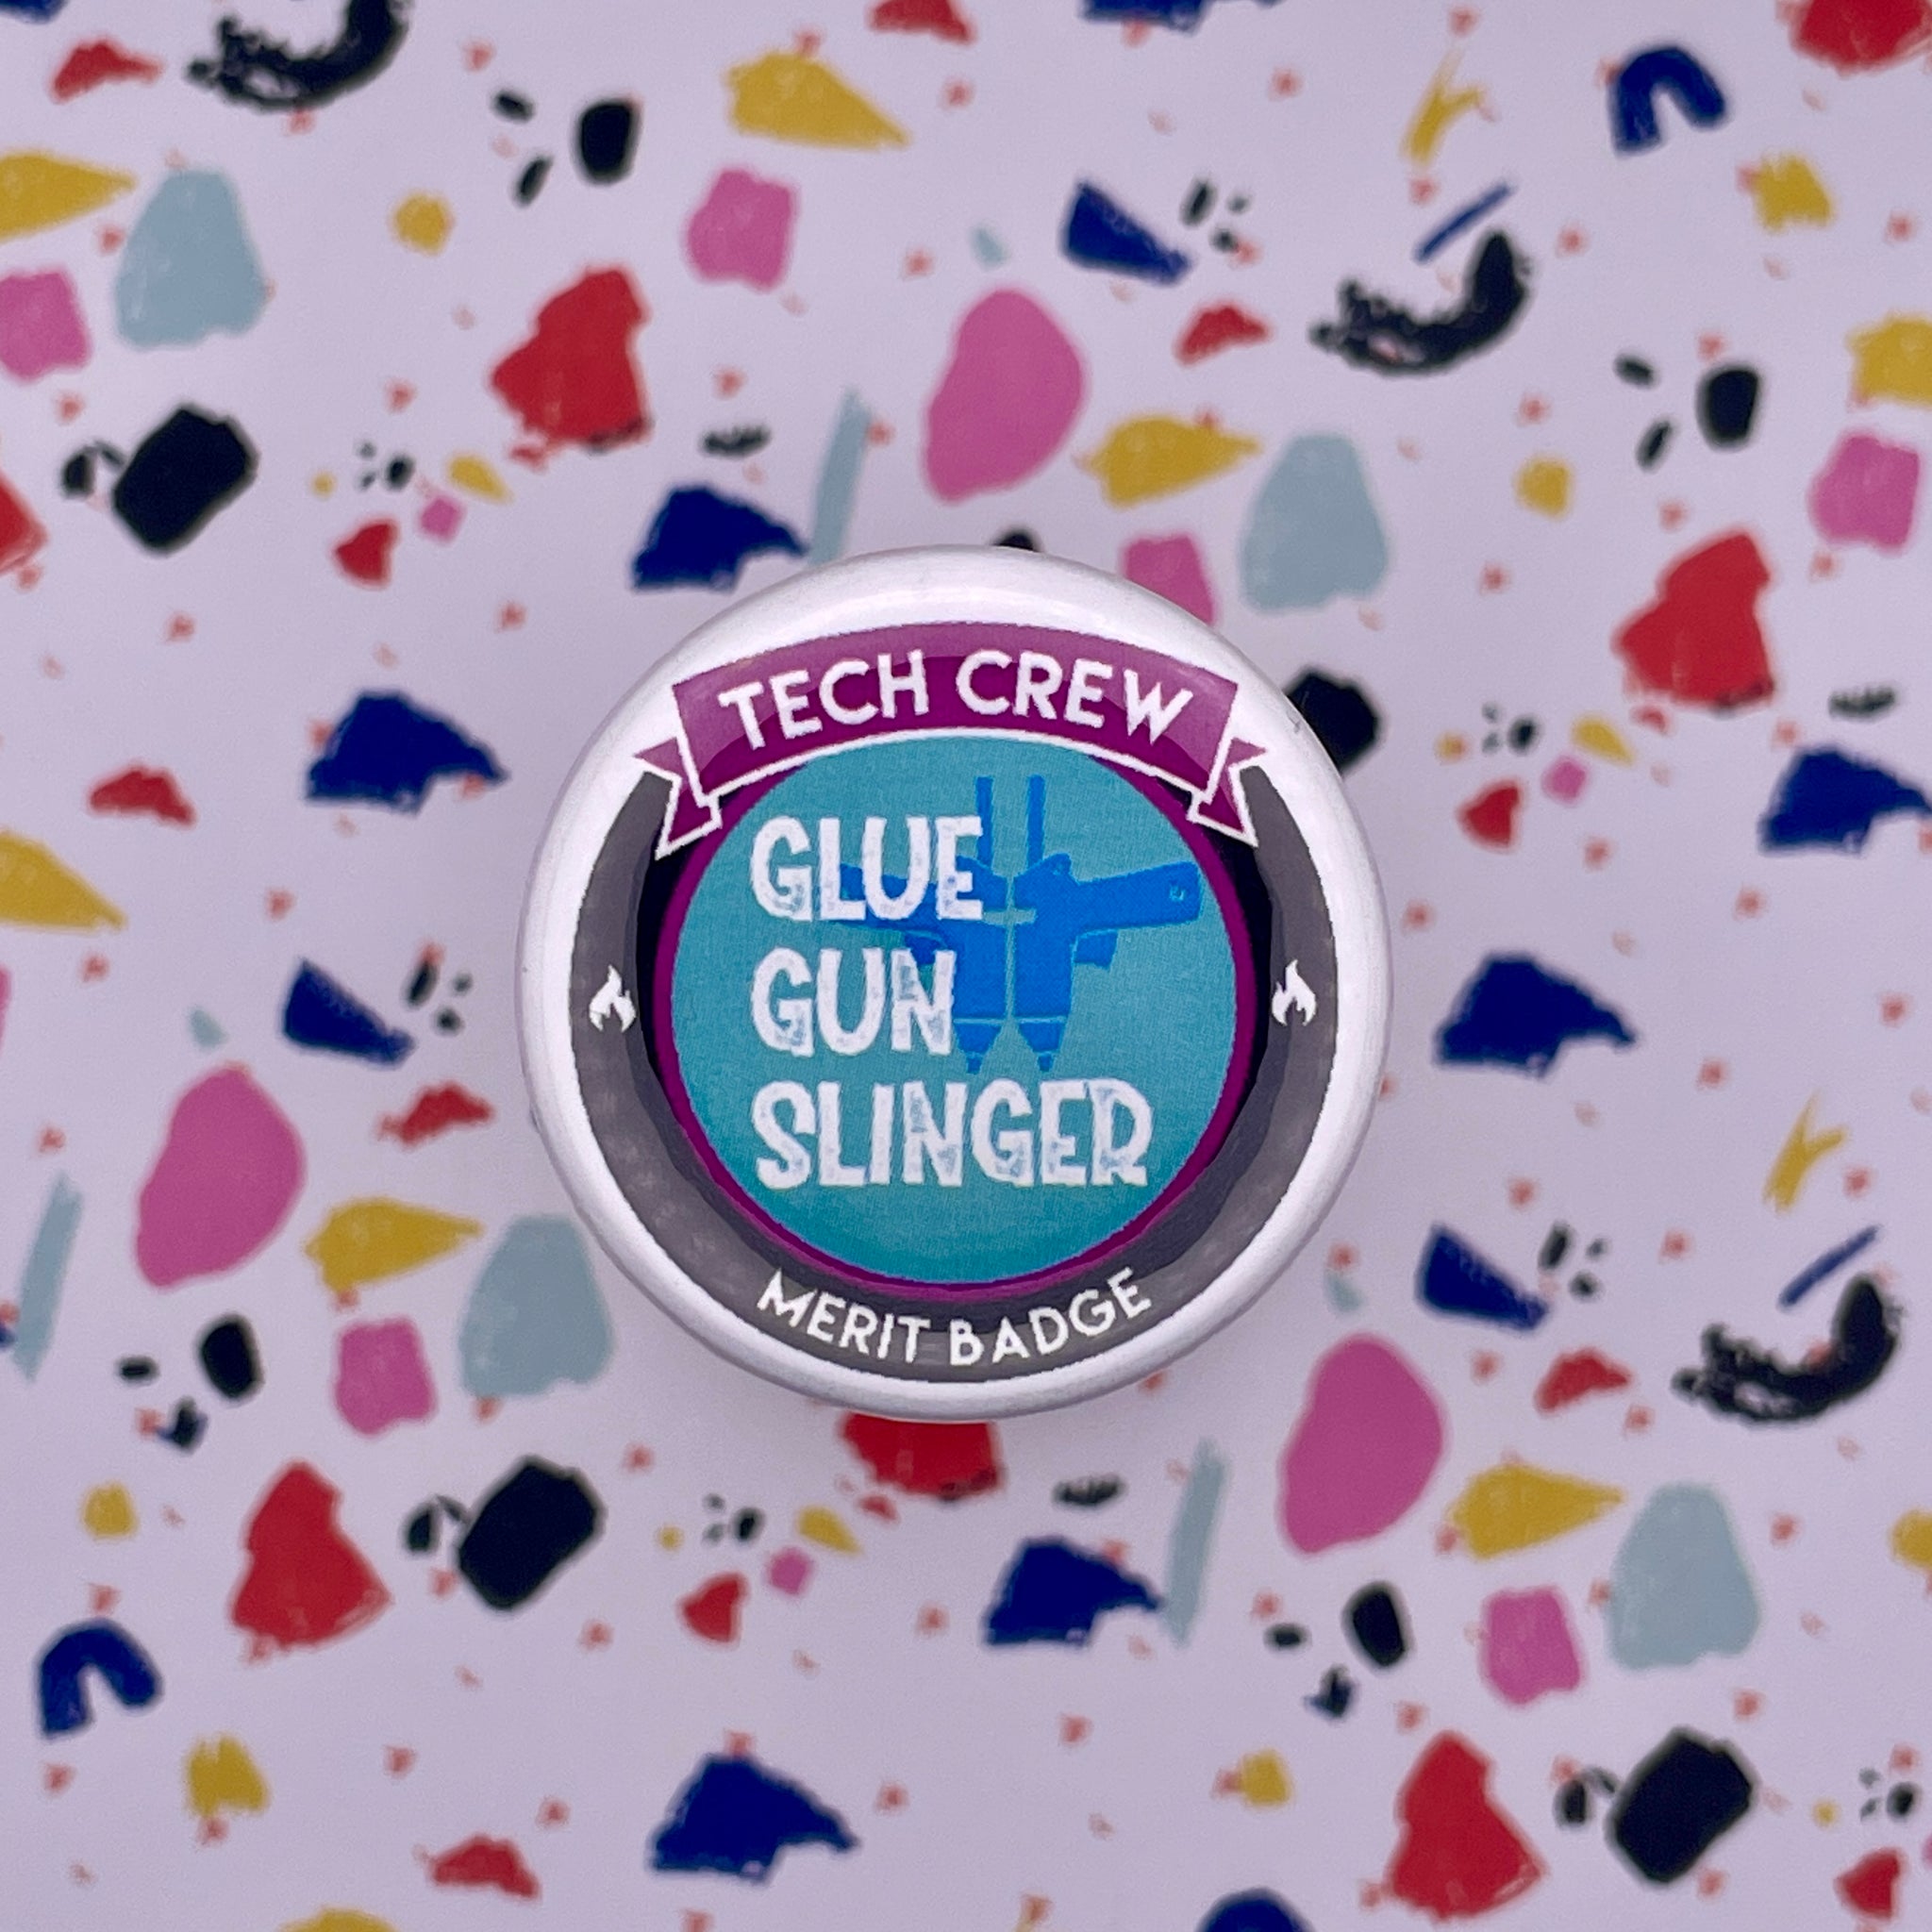 Glue Gun Slinger Tech Crew Merit Badge, 1-1/2" Button